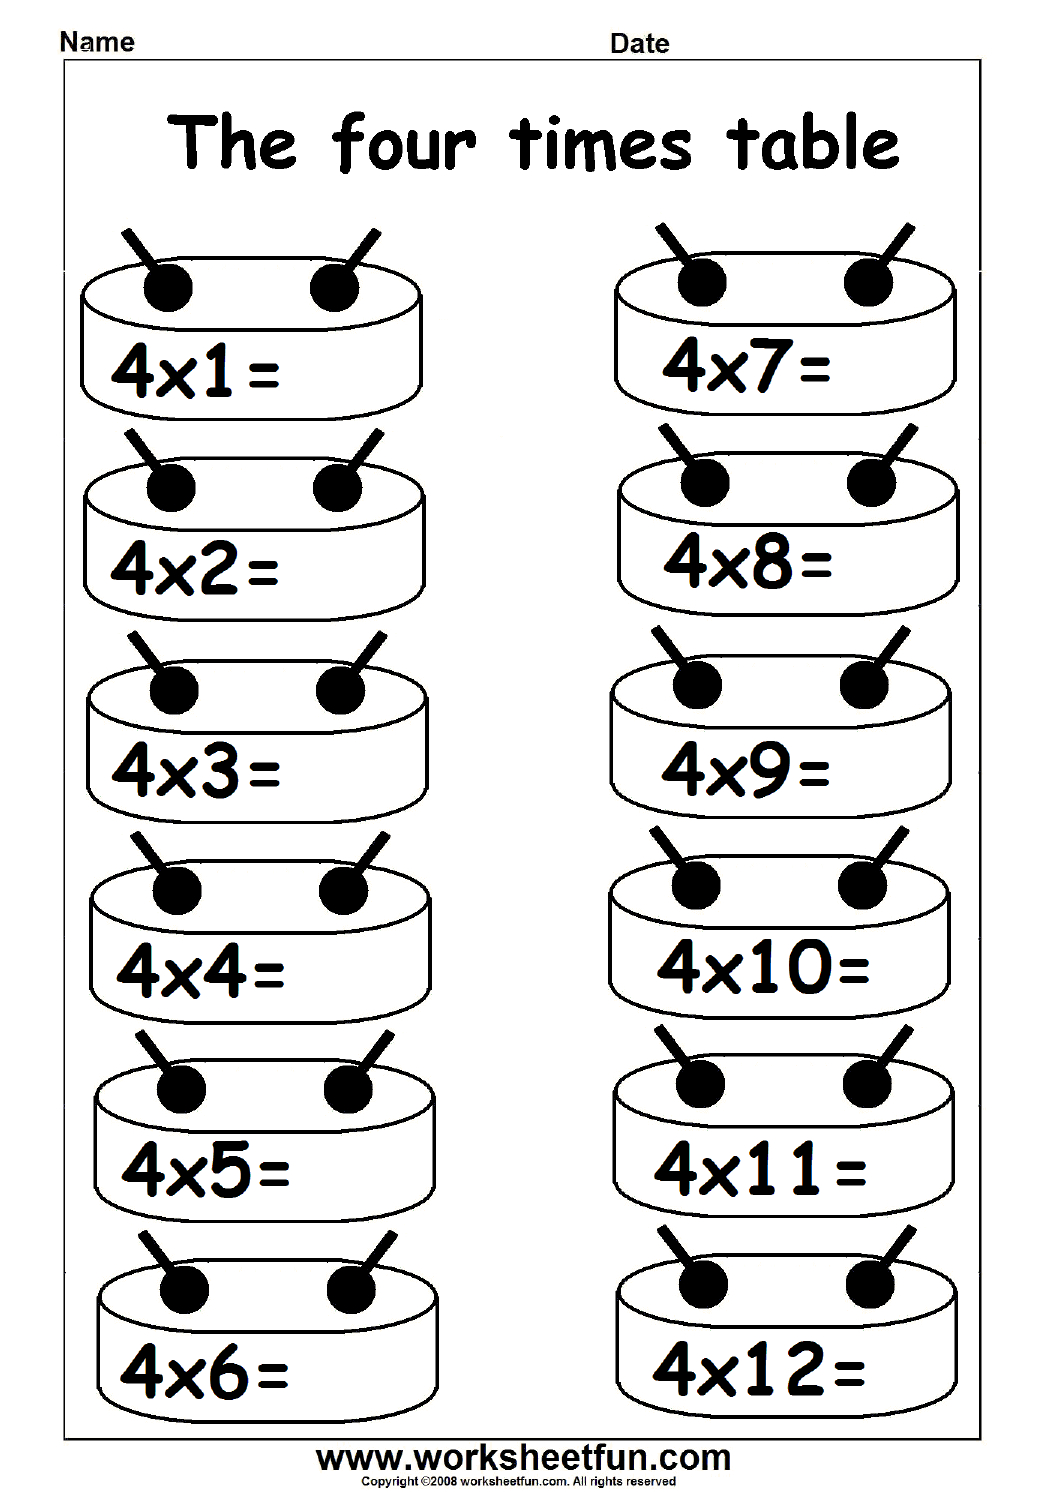 printable-multiplication-worksheets-2-12-printable-multiplication